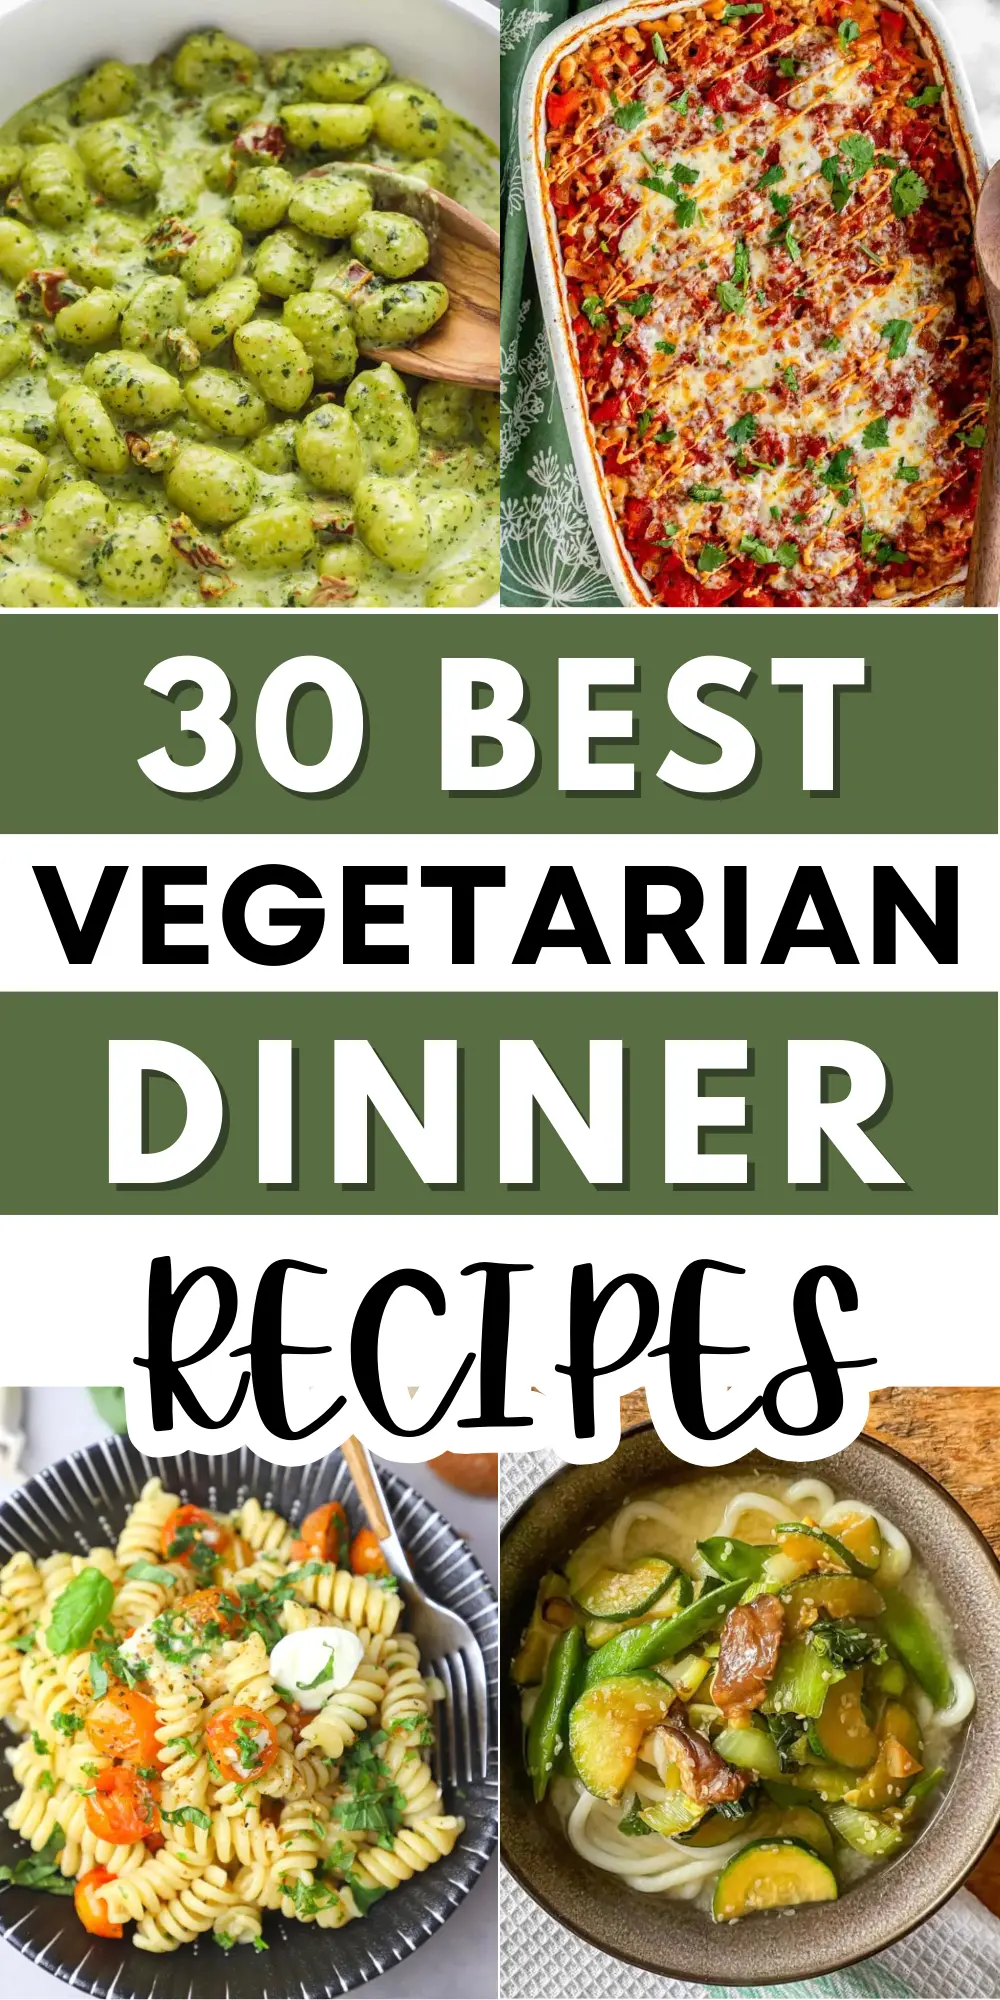 25 Best Vegetarian Dinner Recipes